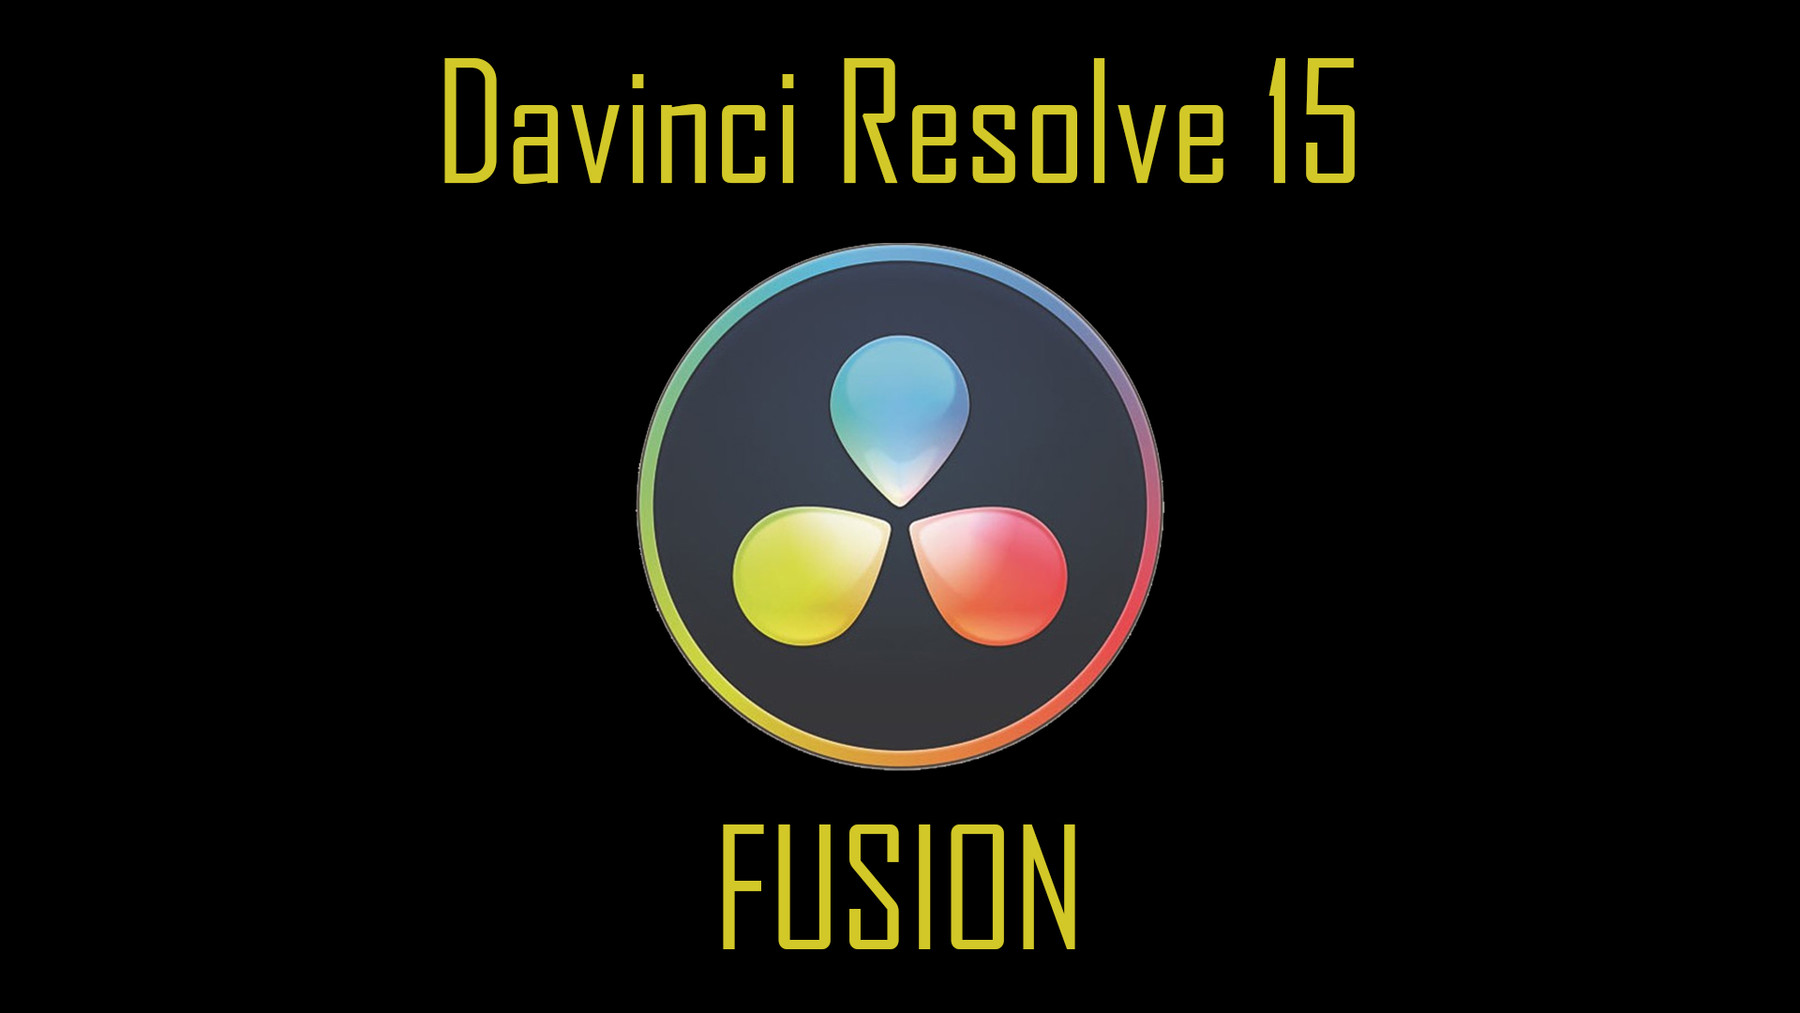 davinci resolve fusion free